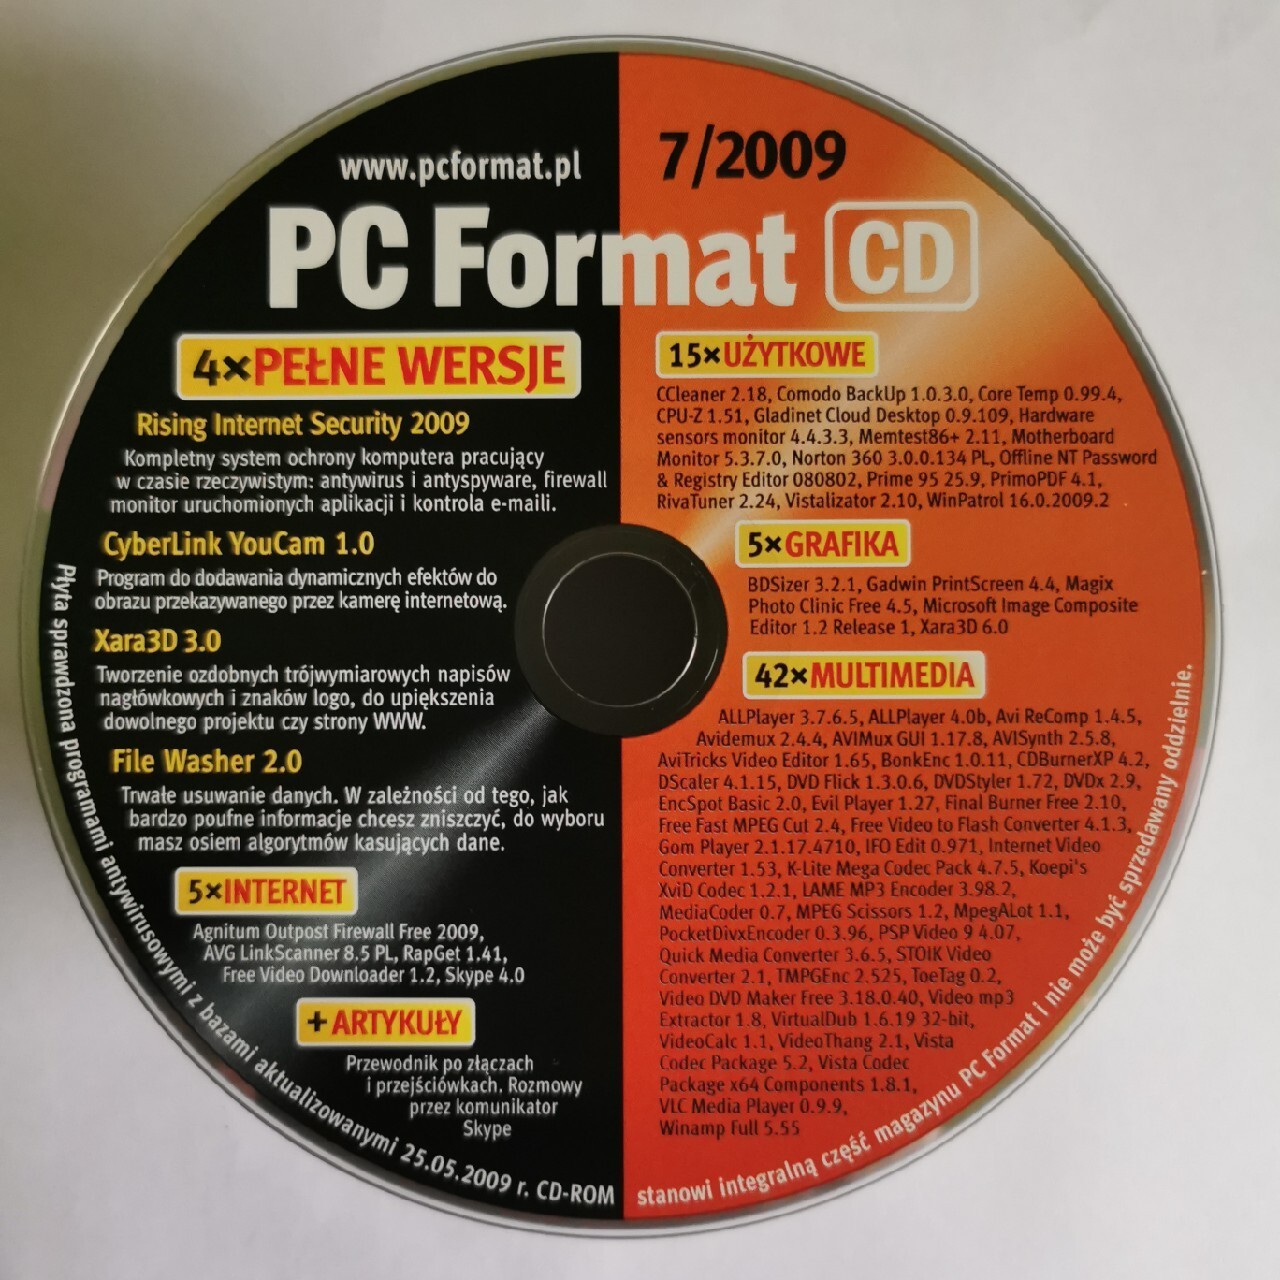 PC Gamer Po Polsku nr 7-8/97 (12), Little Big A 2, Radoszyce